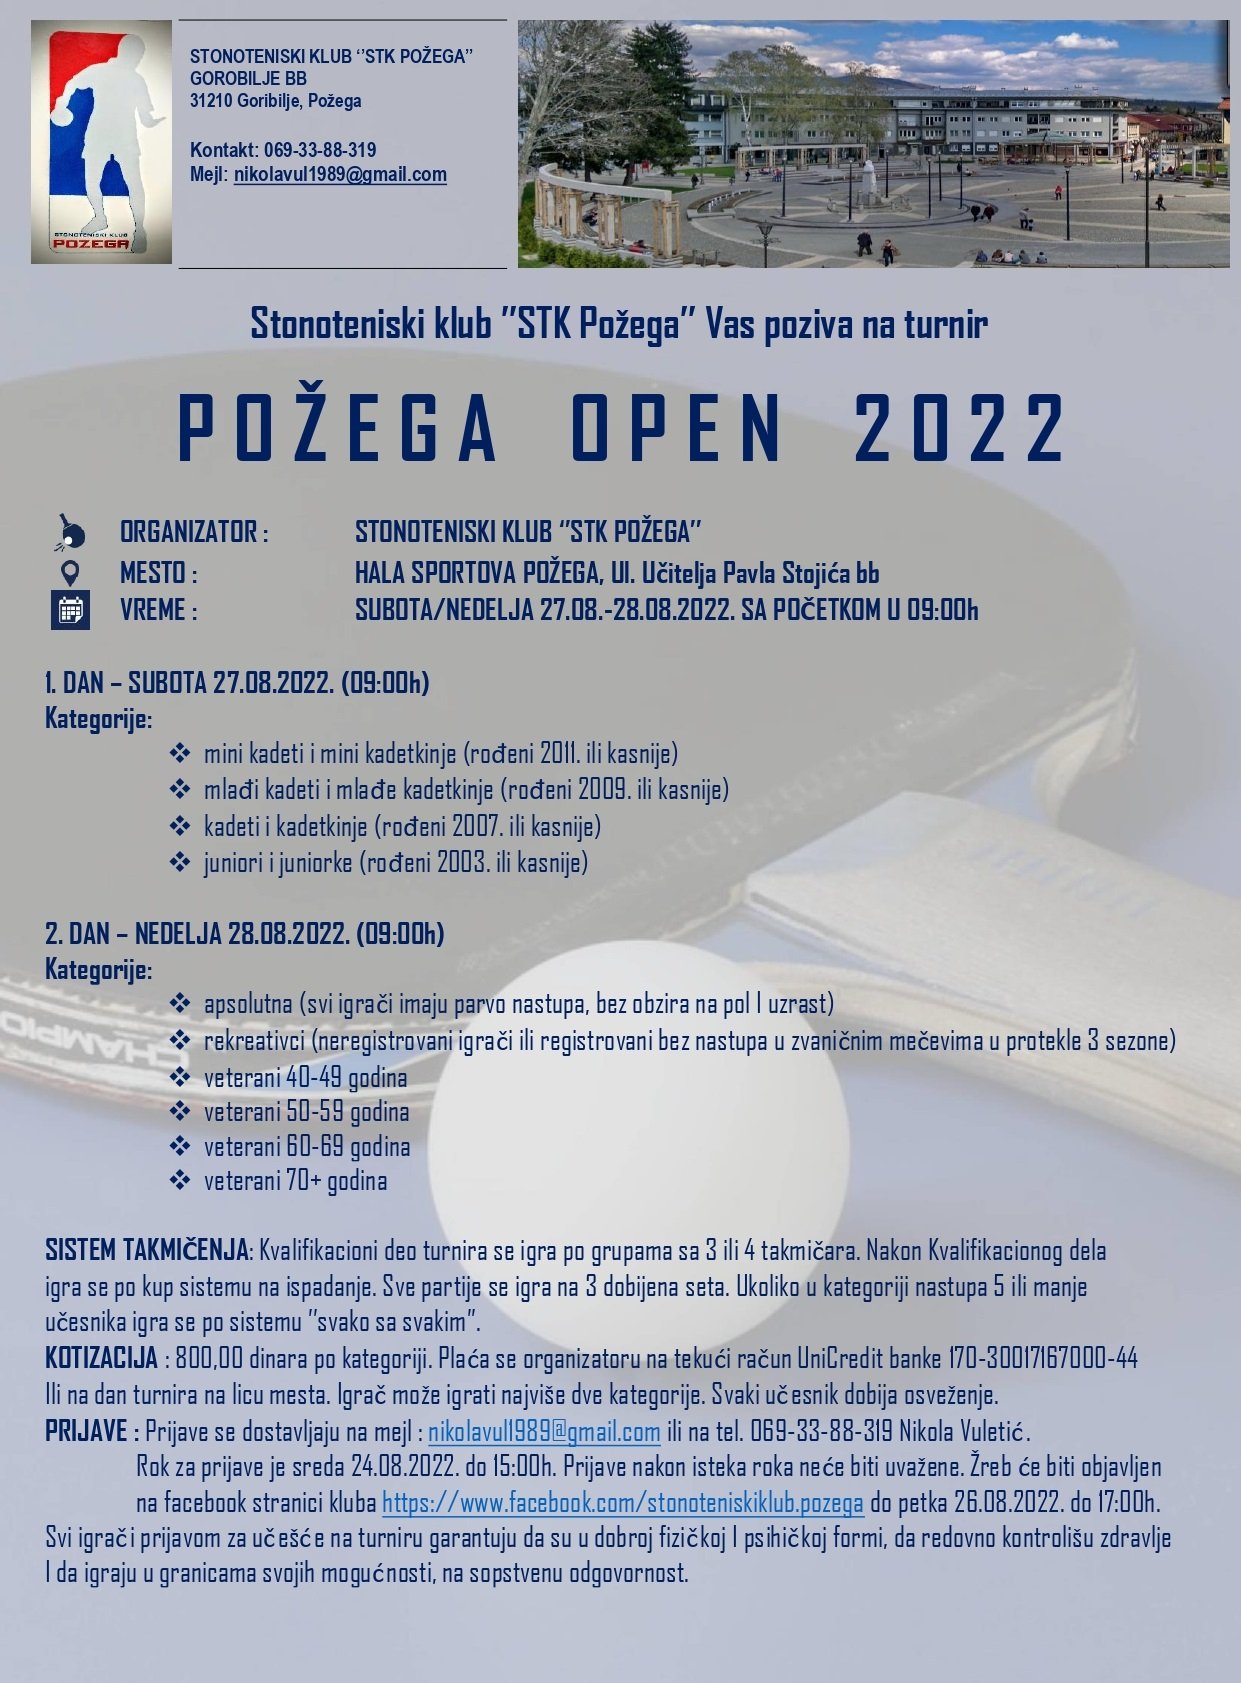 Požega Open 2022